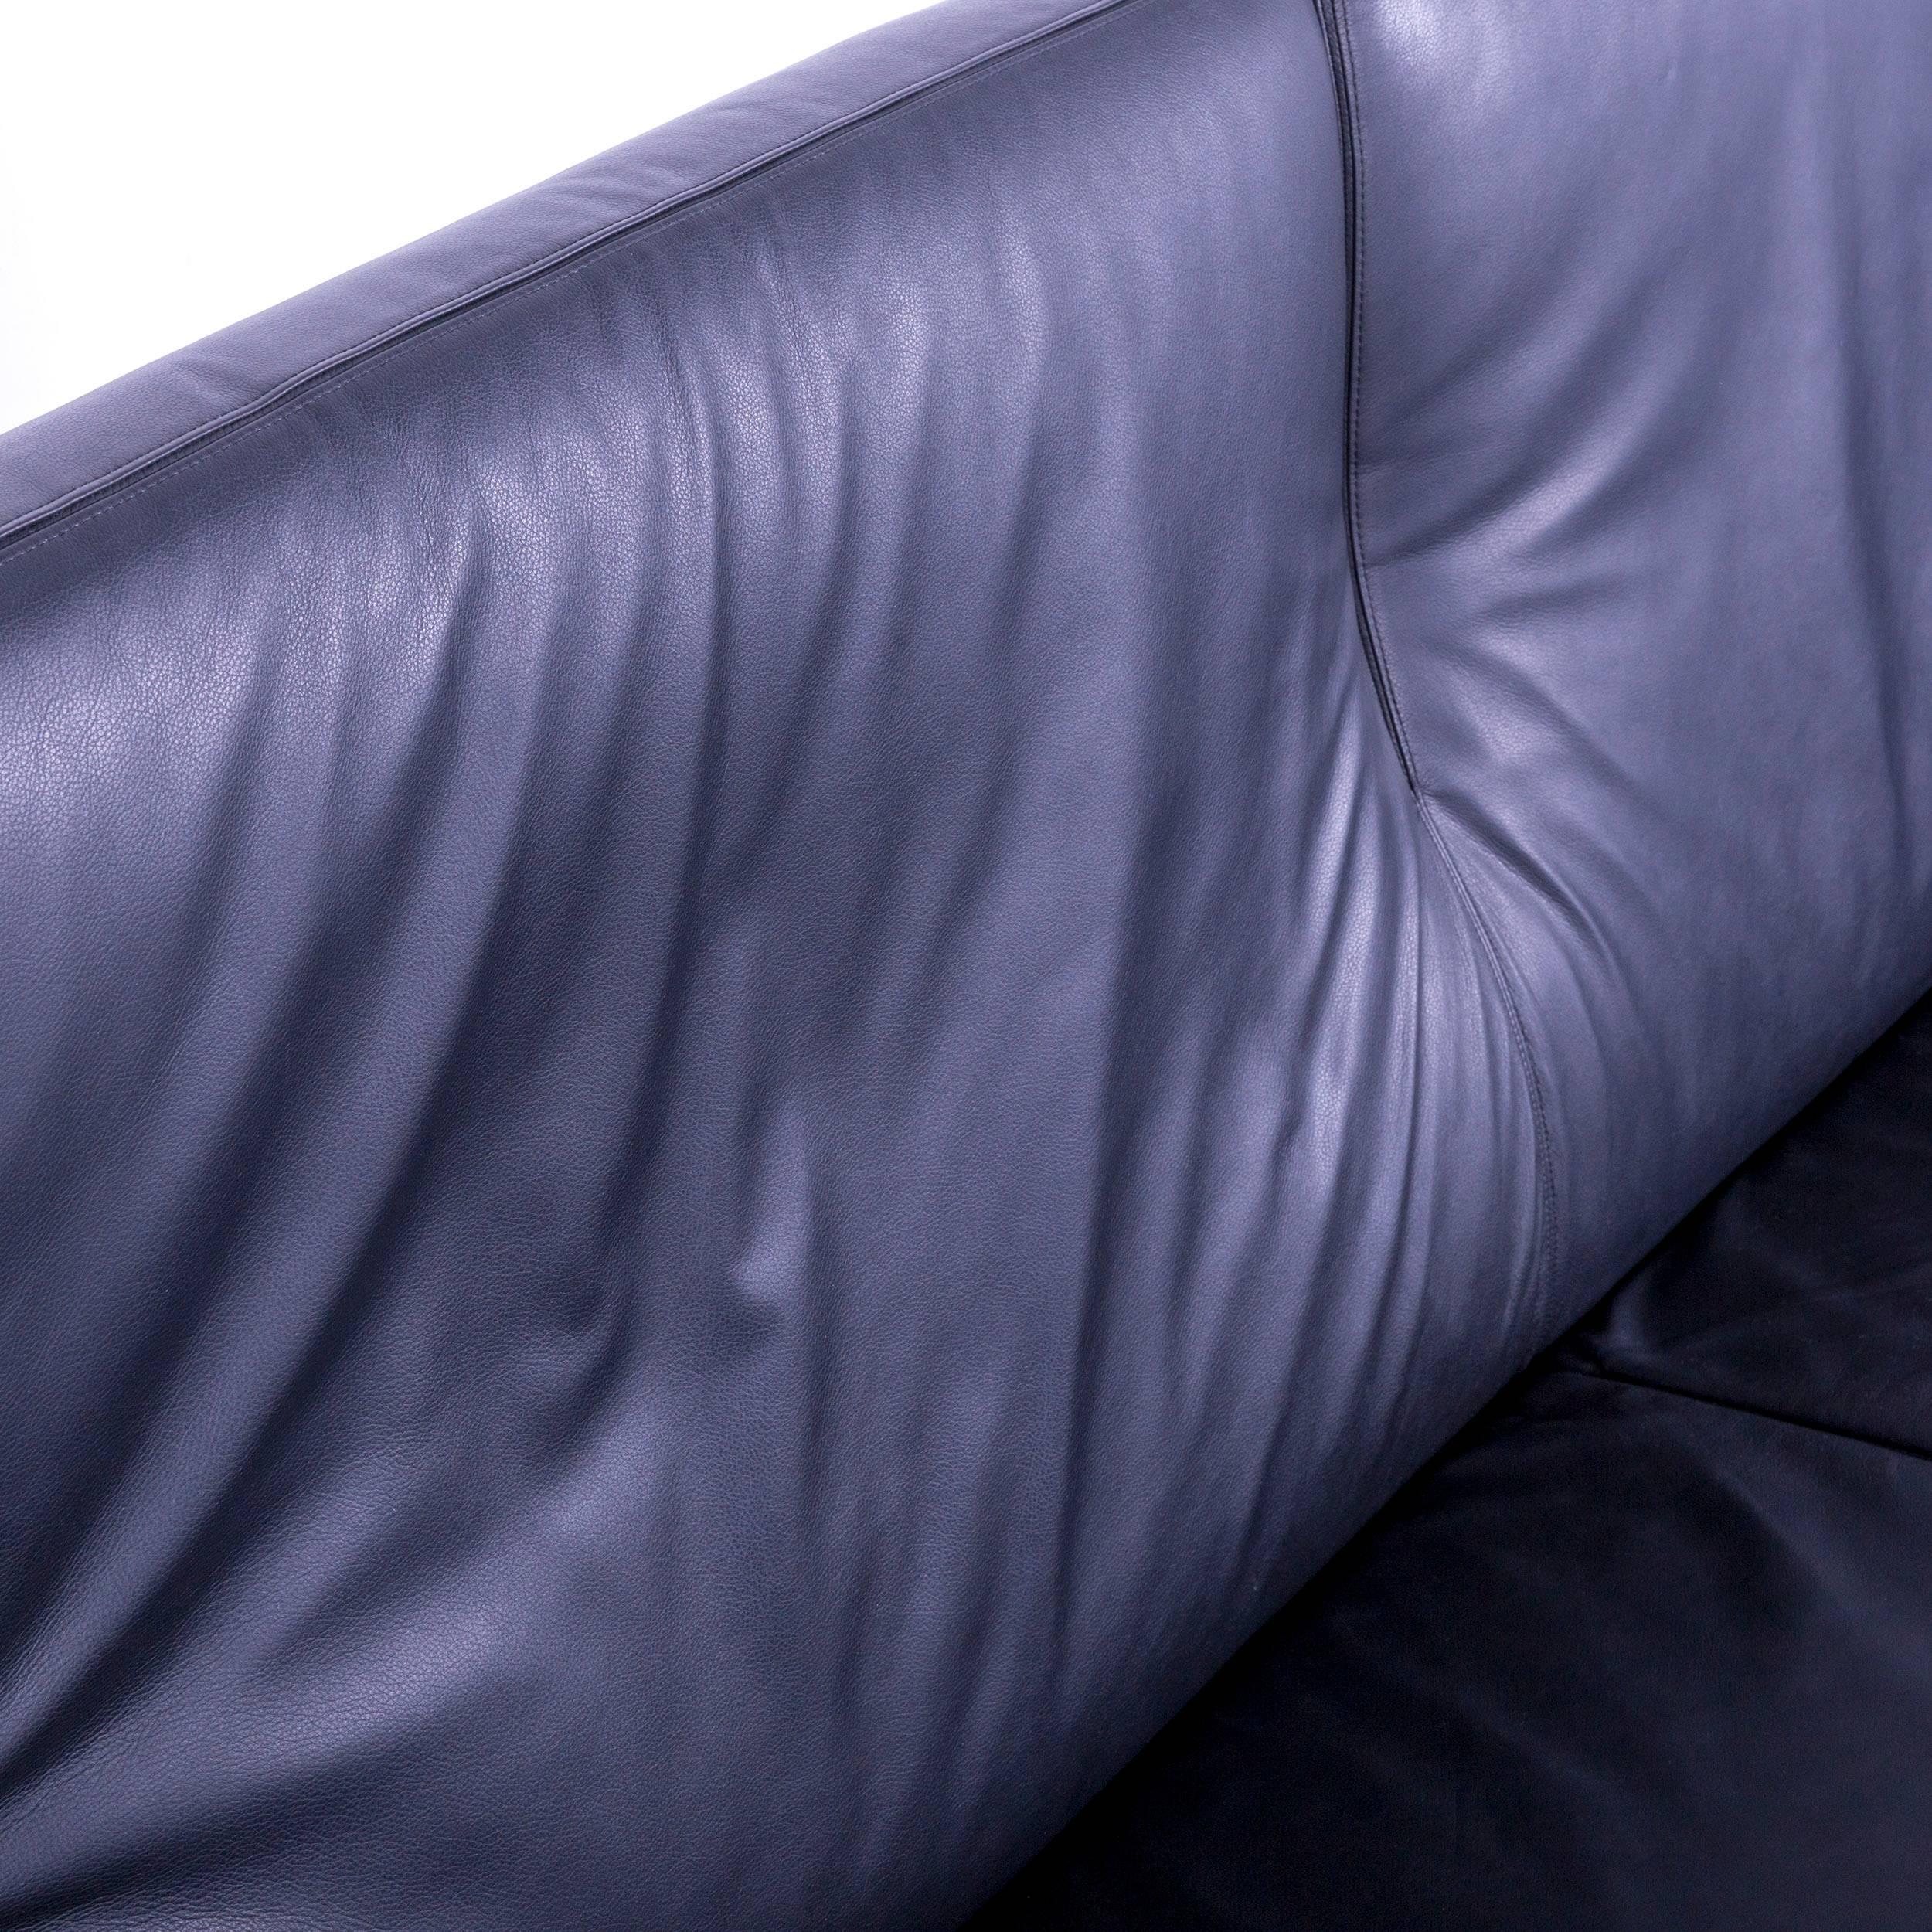 B&B Italia Oriente Designer Leather Sofa Set Three-Seater + Foot-Stool For Sale 2